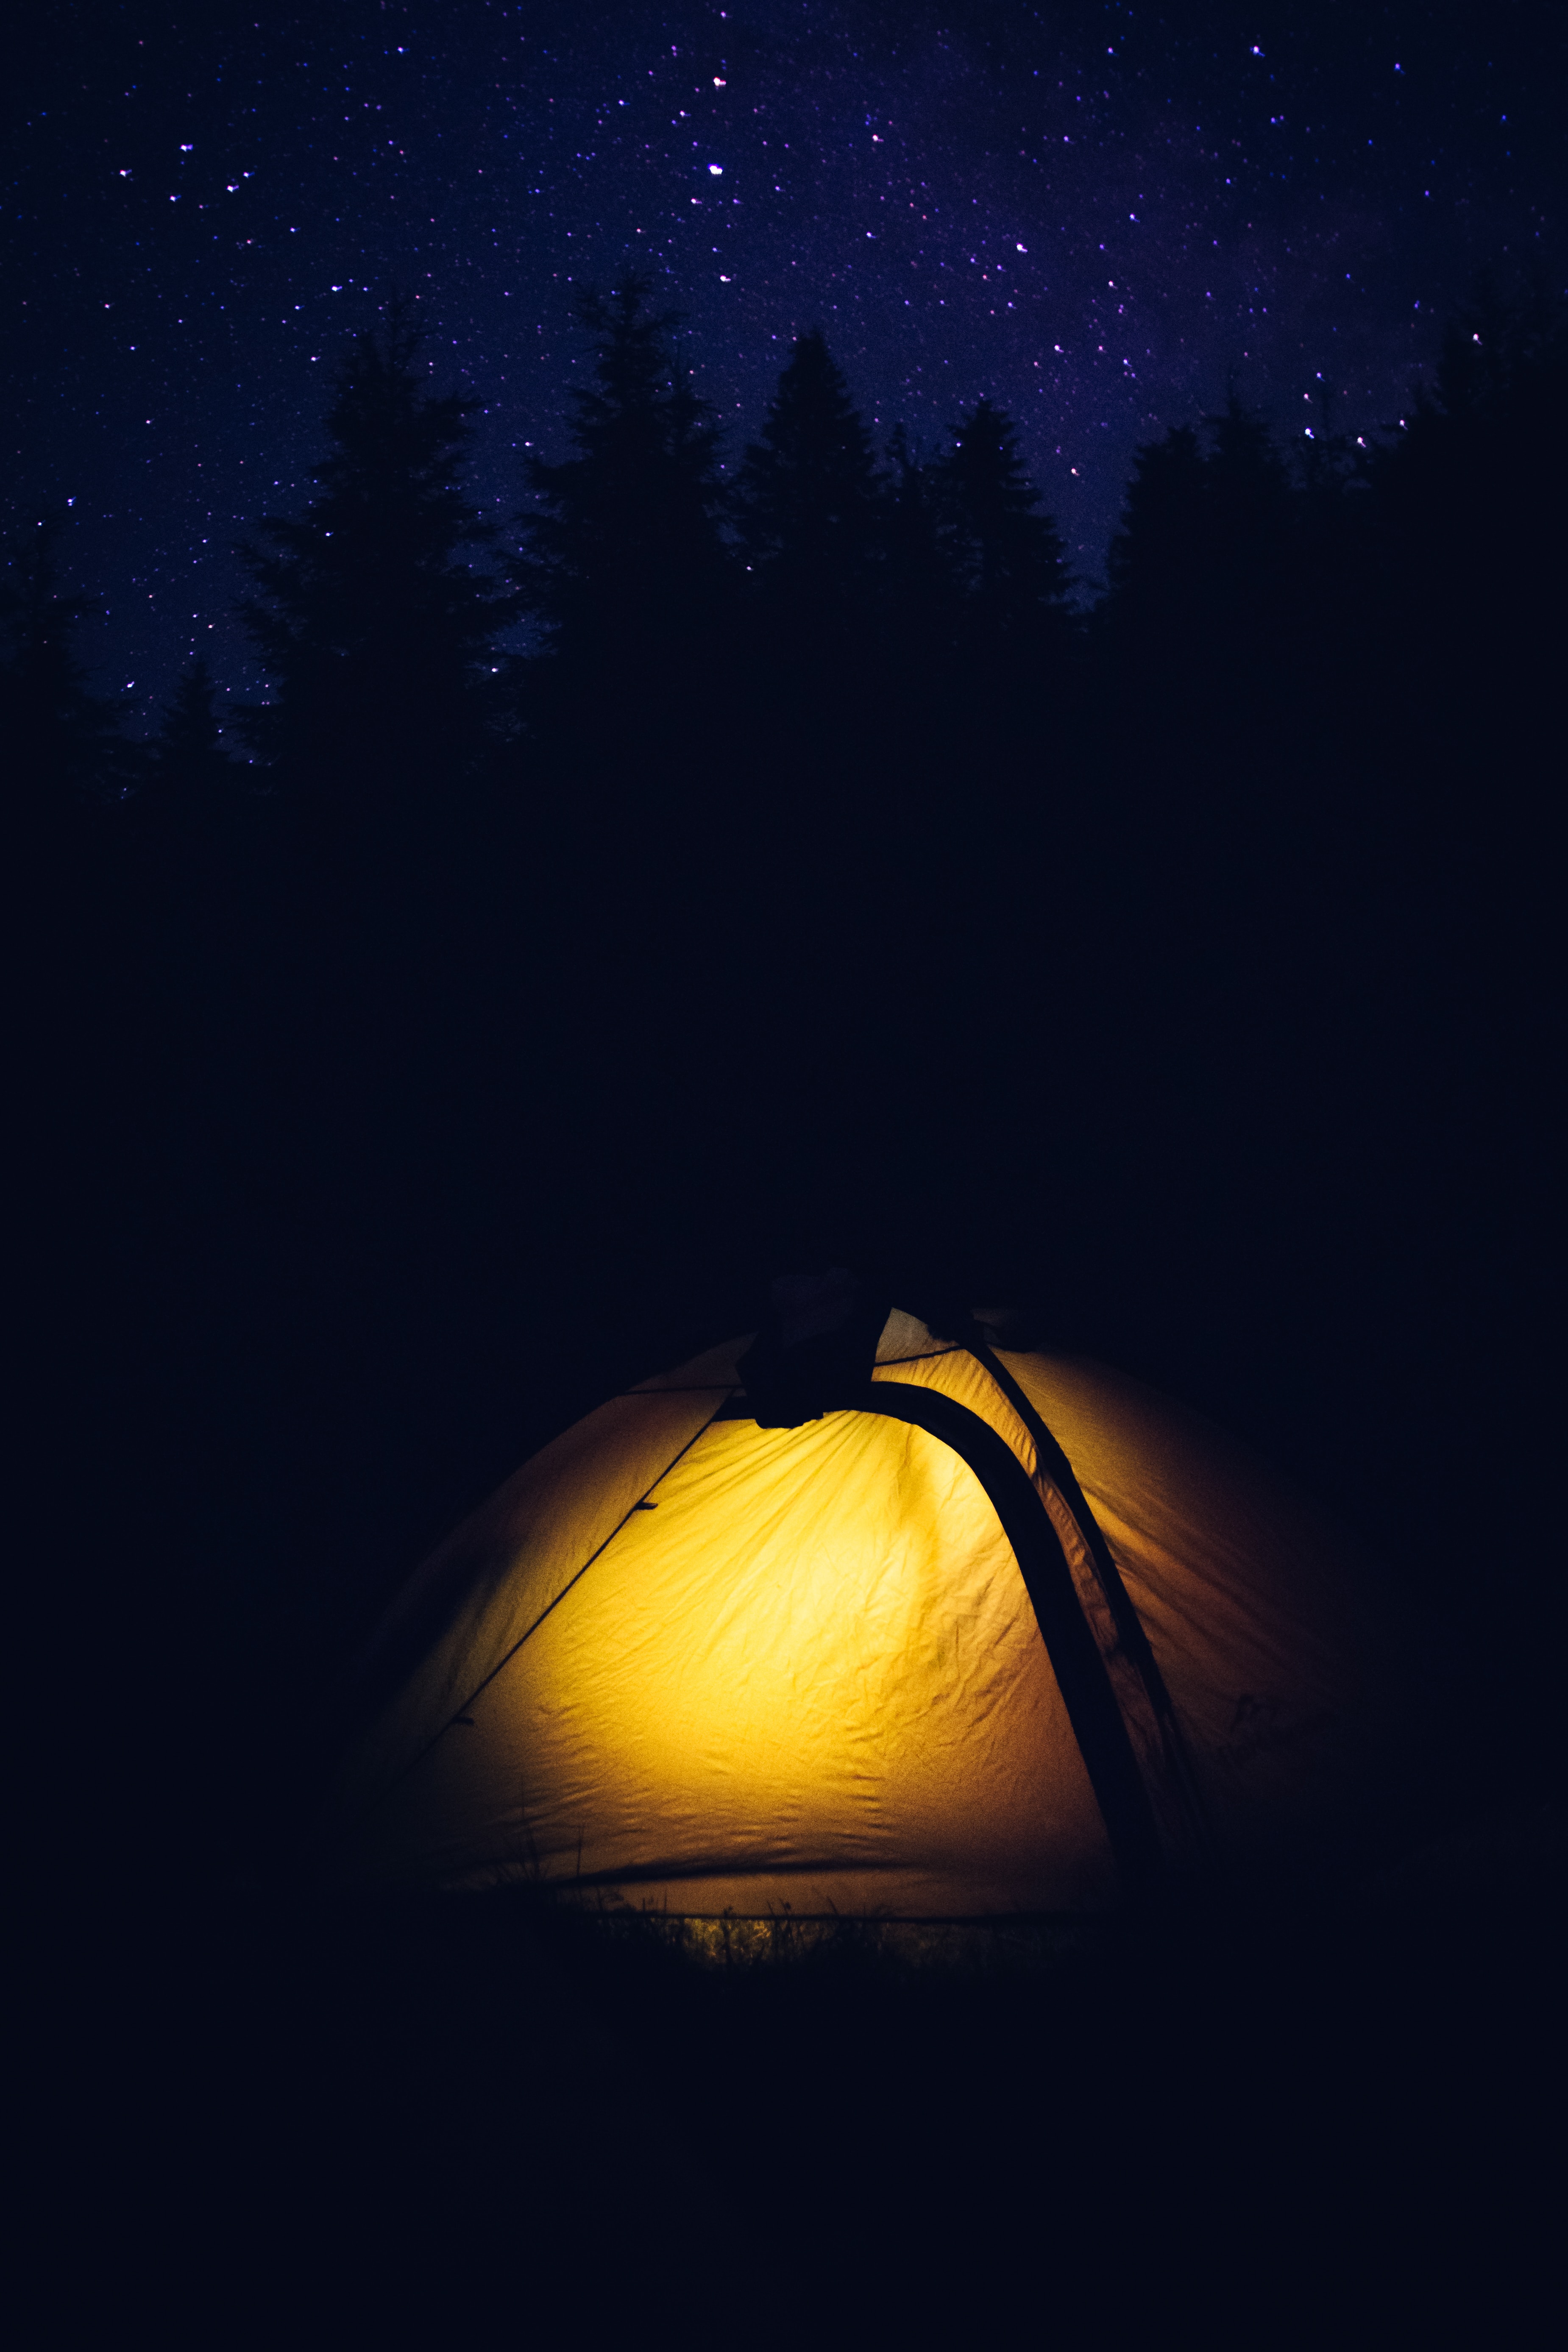 dark, forest, tent, campsite 3d Wallpaper